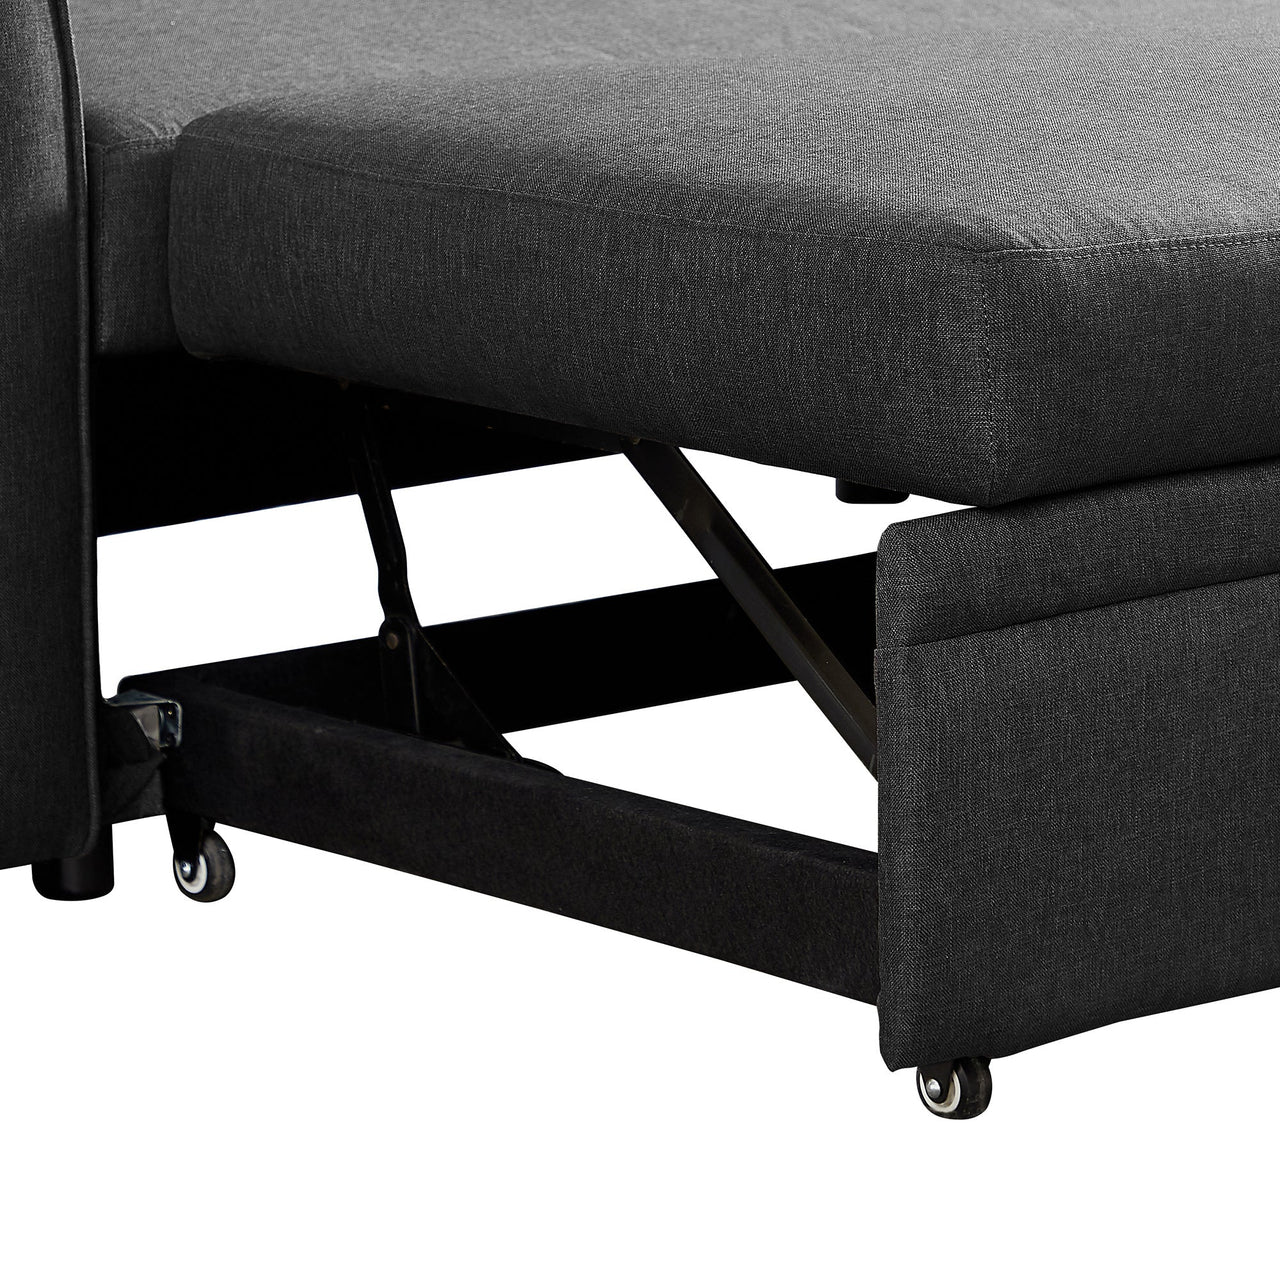 Small L - shaped Sectional Sofa - Casatrail.com